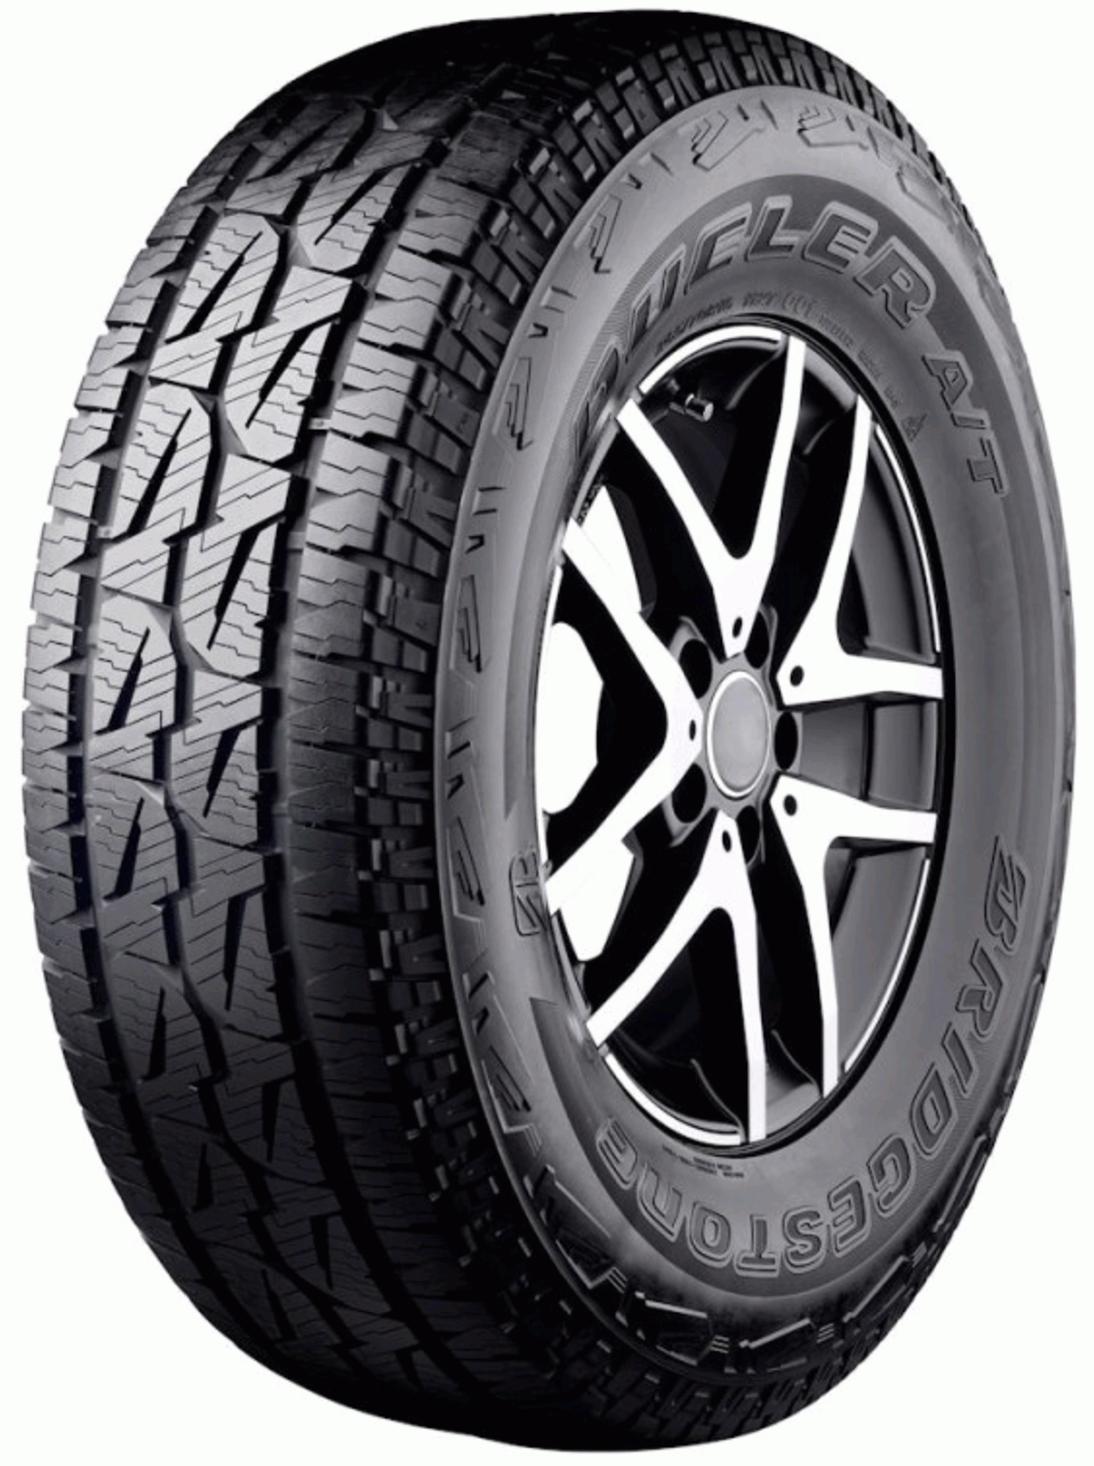 Tire Tests Dueler - AT Bridgestone and Reviews 001